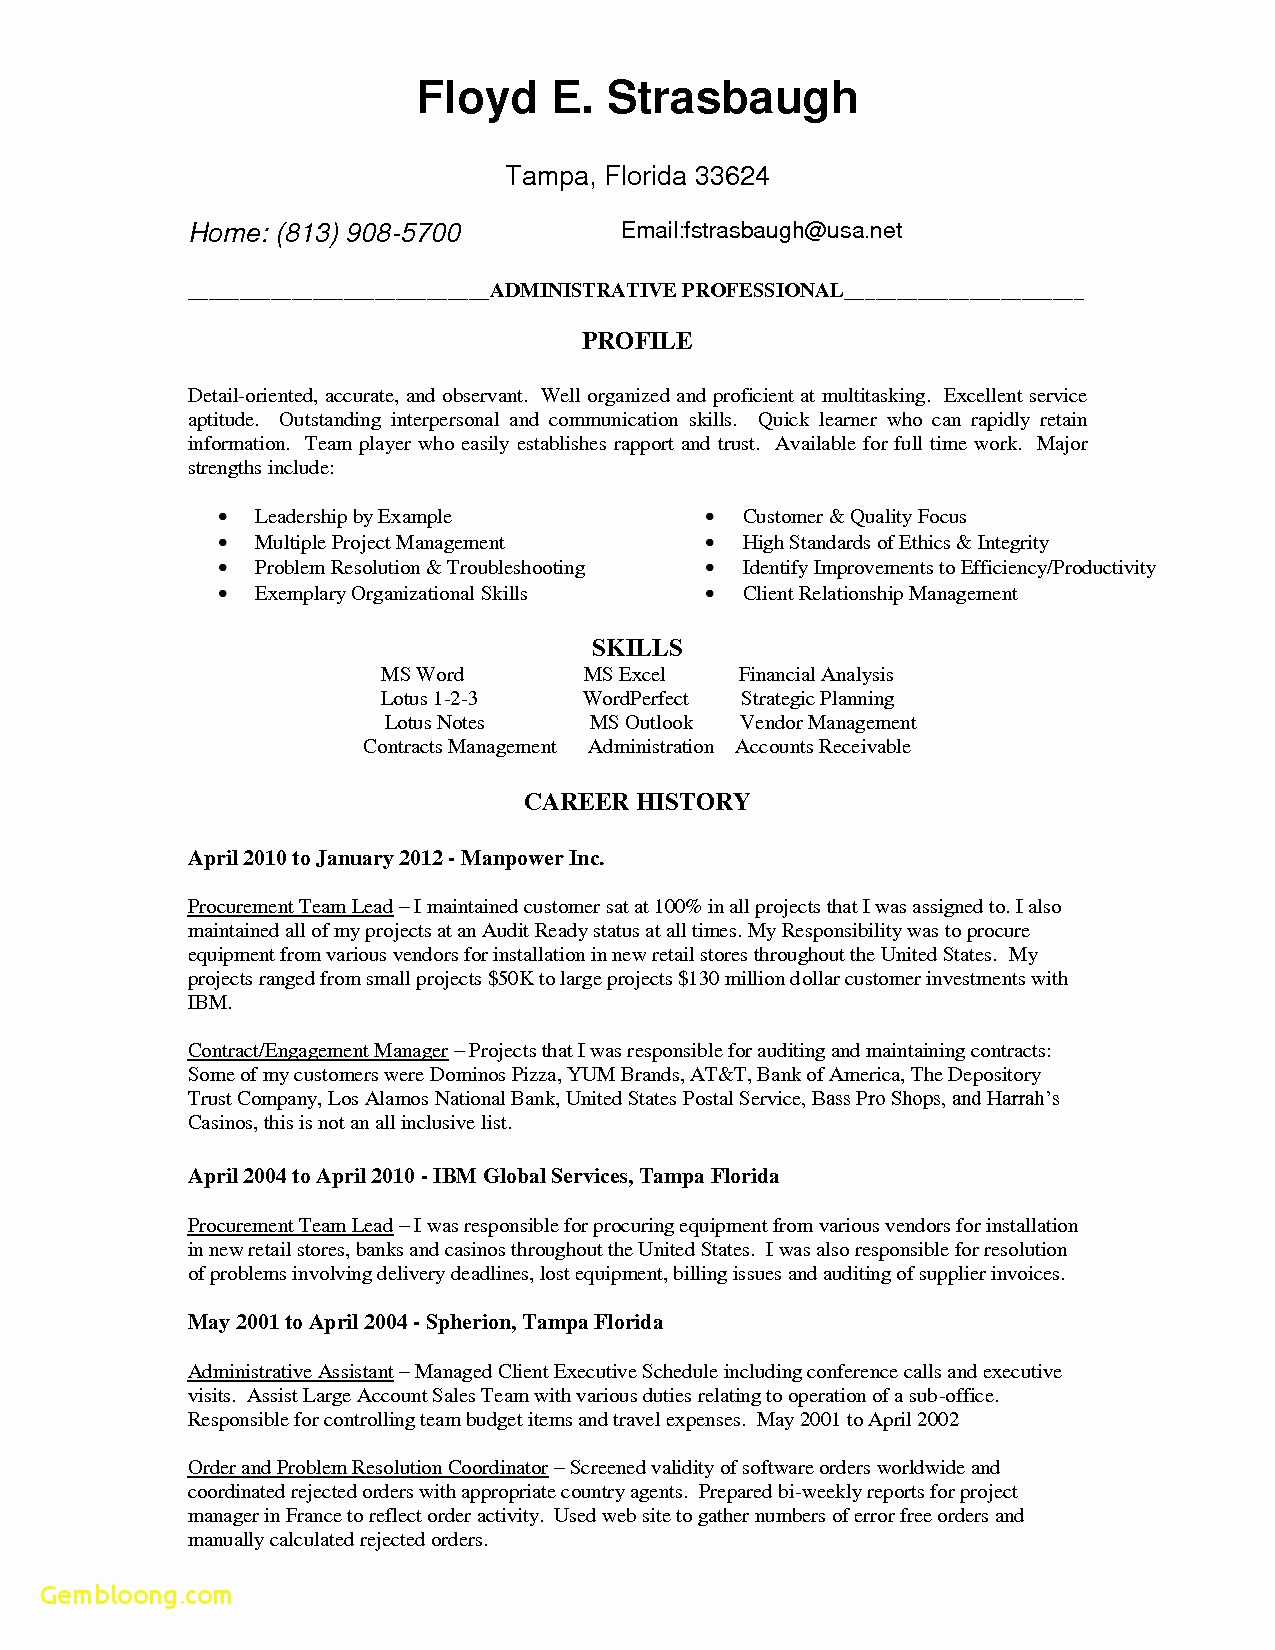 Resume Cover Letter Template - Example Curriculum Vitae Best Fresh Resume Cover Letter